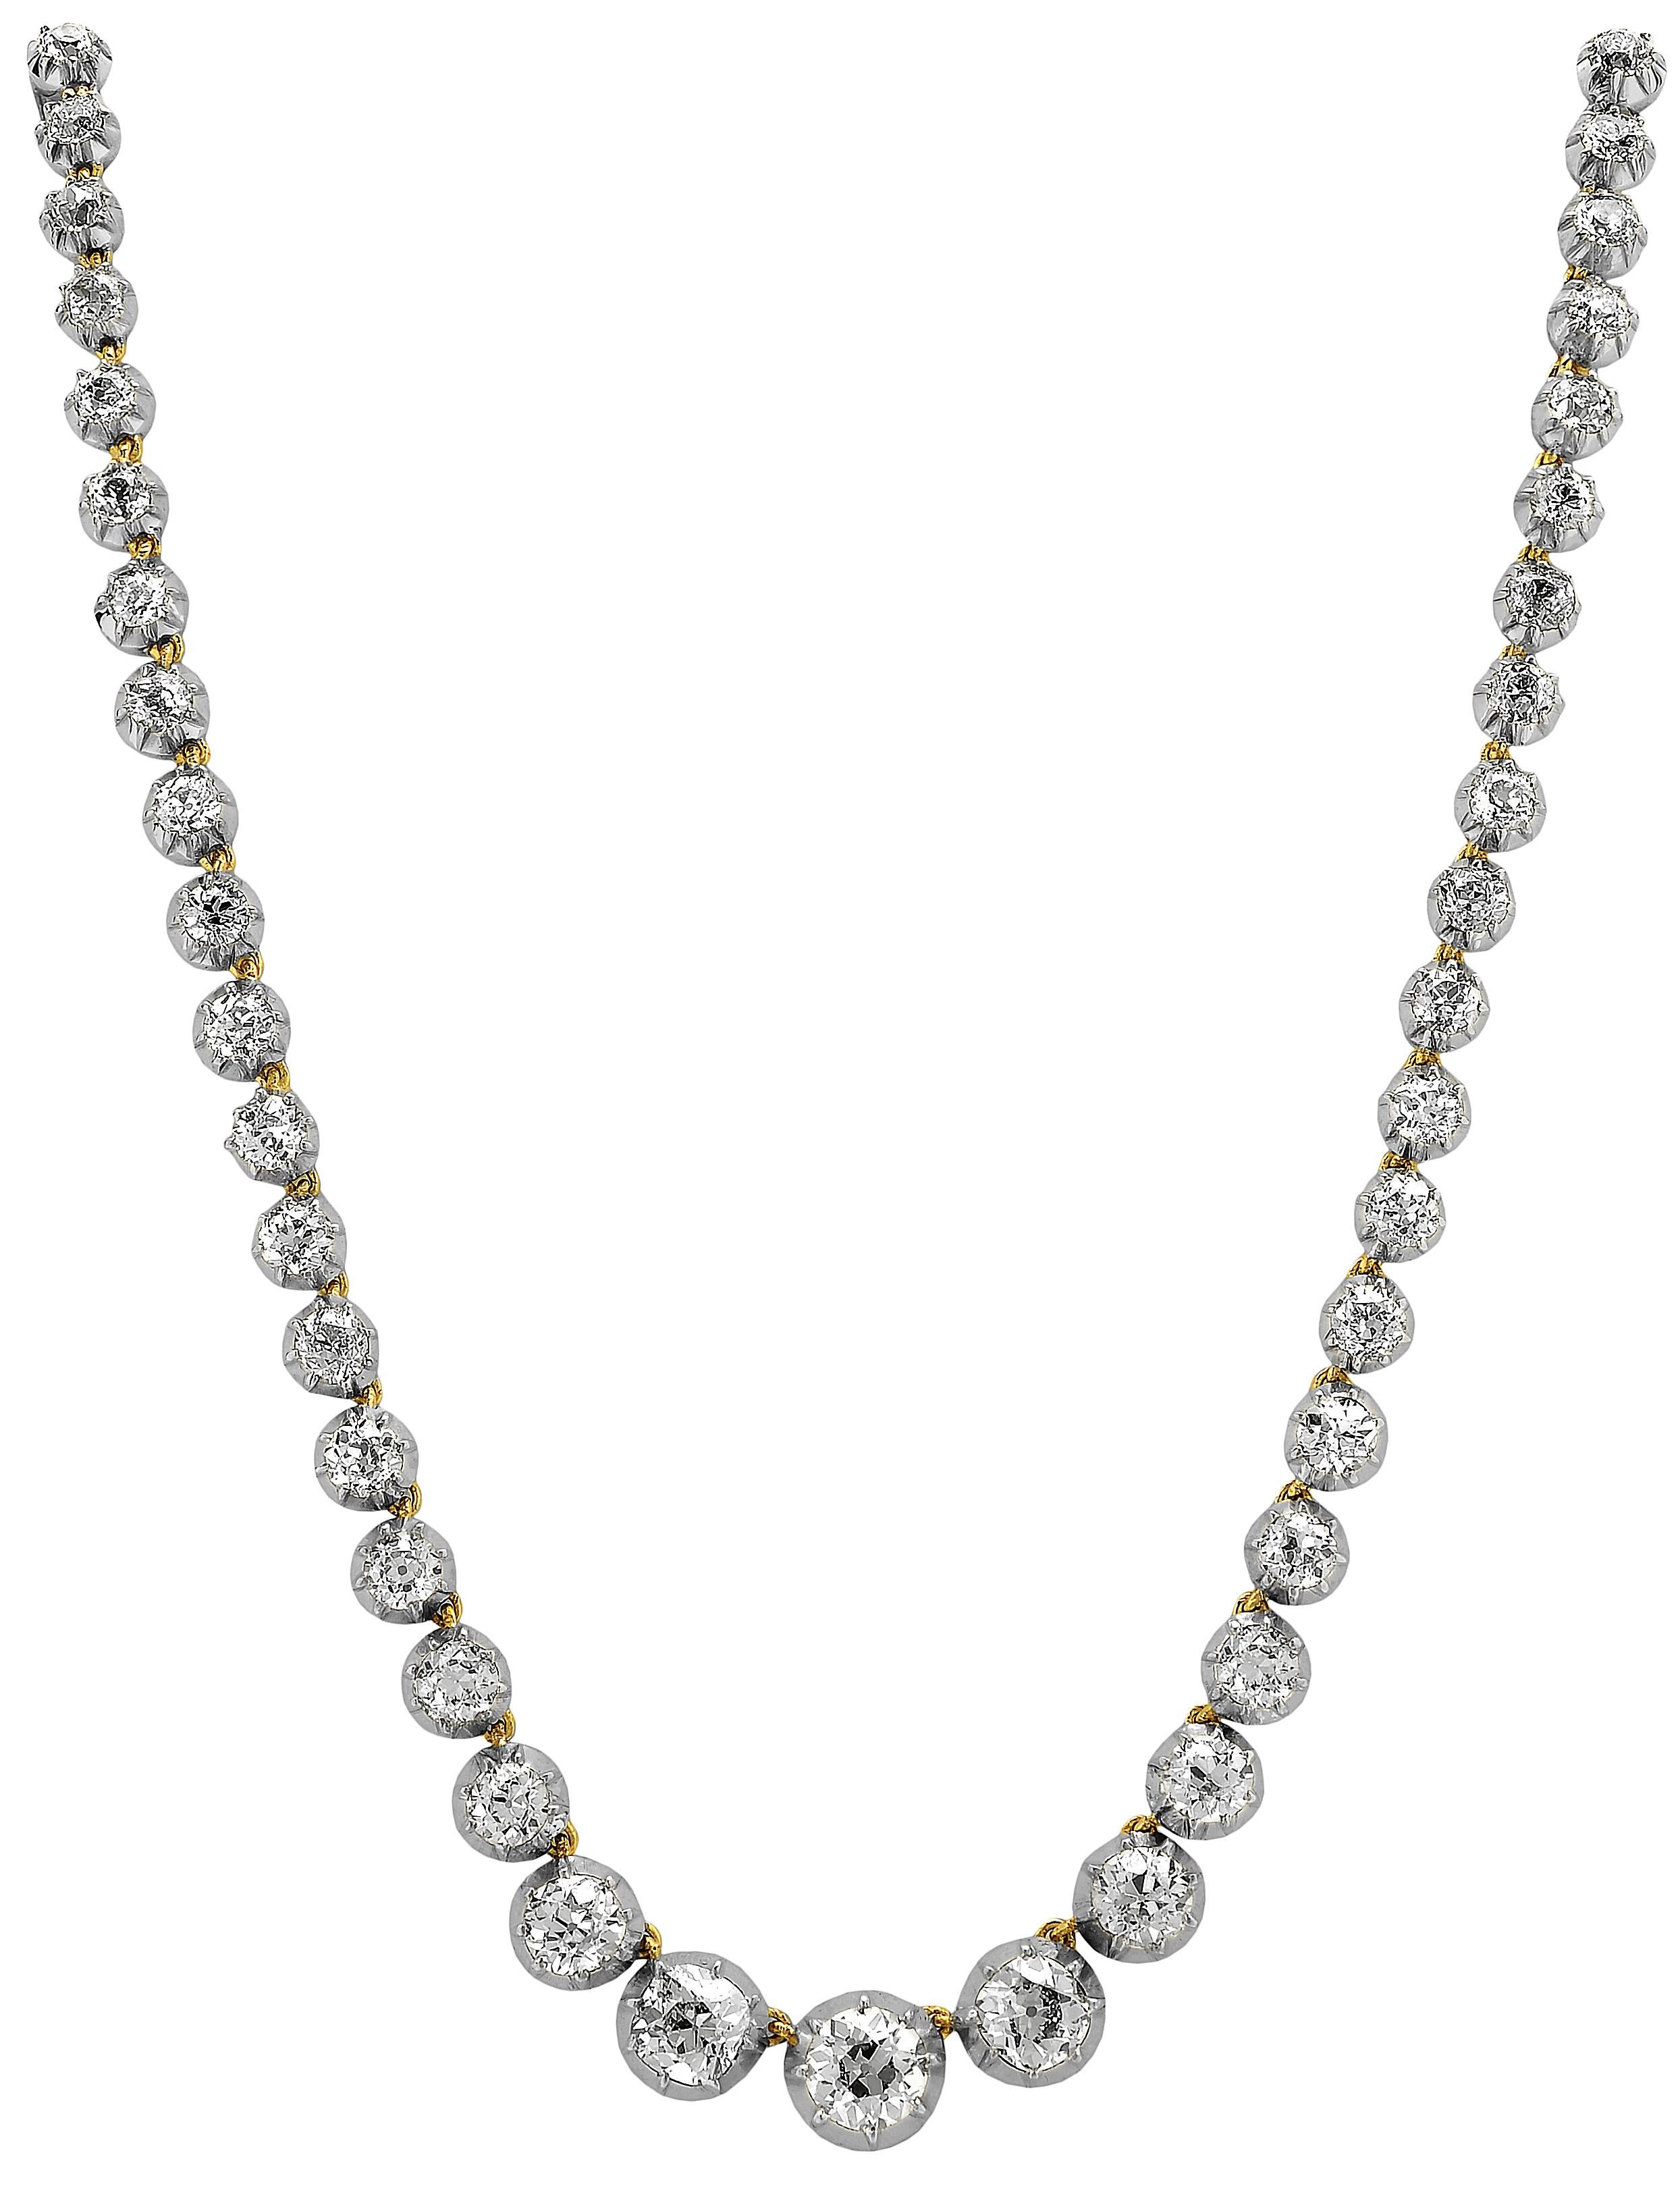 Antique Victorian Riviere, Single Strand Old European Cut Diamond Necklace/Tiara 3